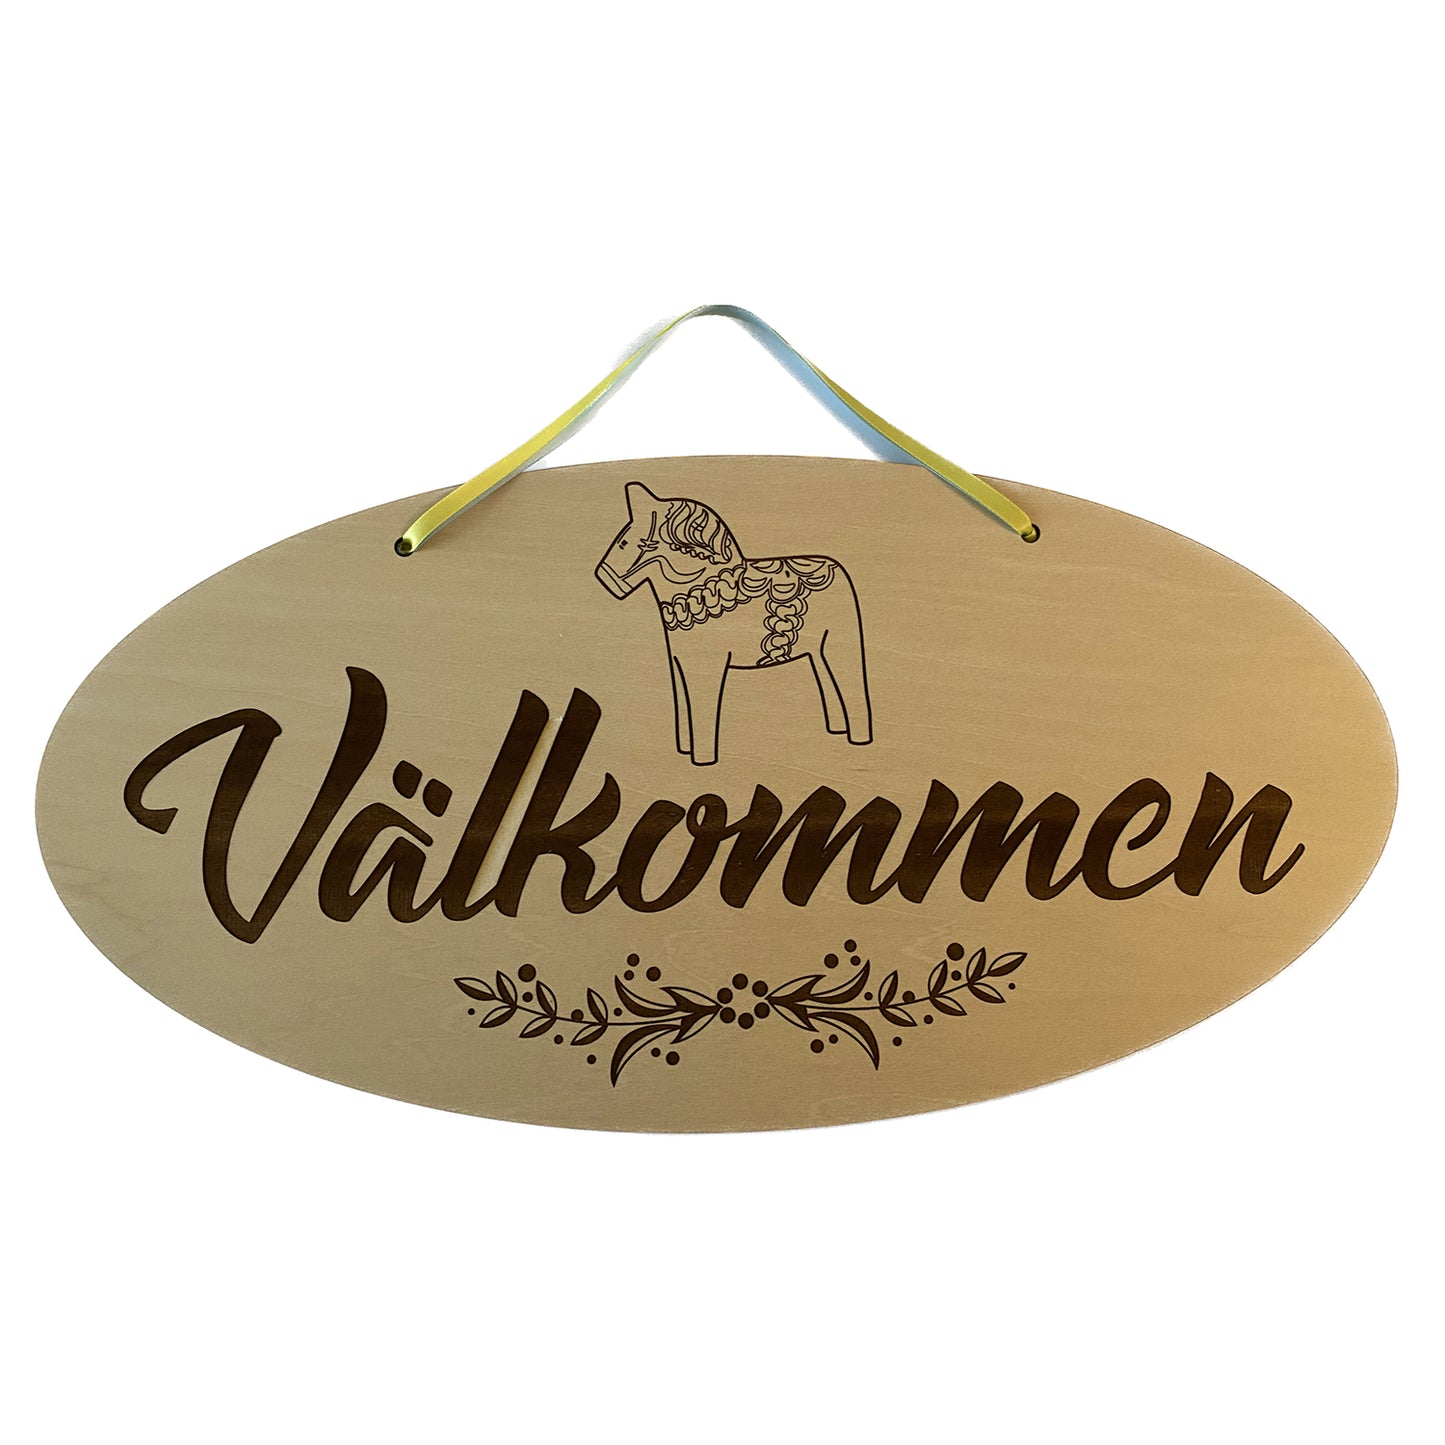 Wonderful Välkommen with Dala Horse (Welcome) Swedish